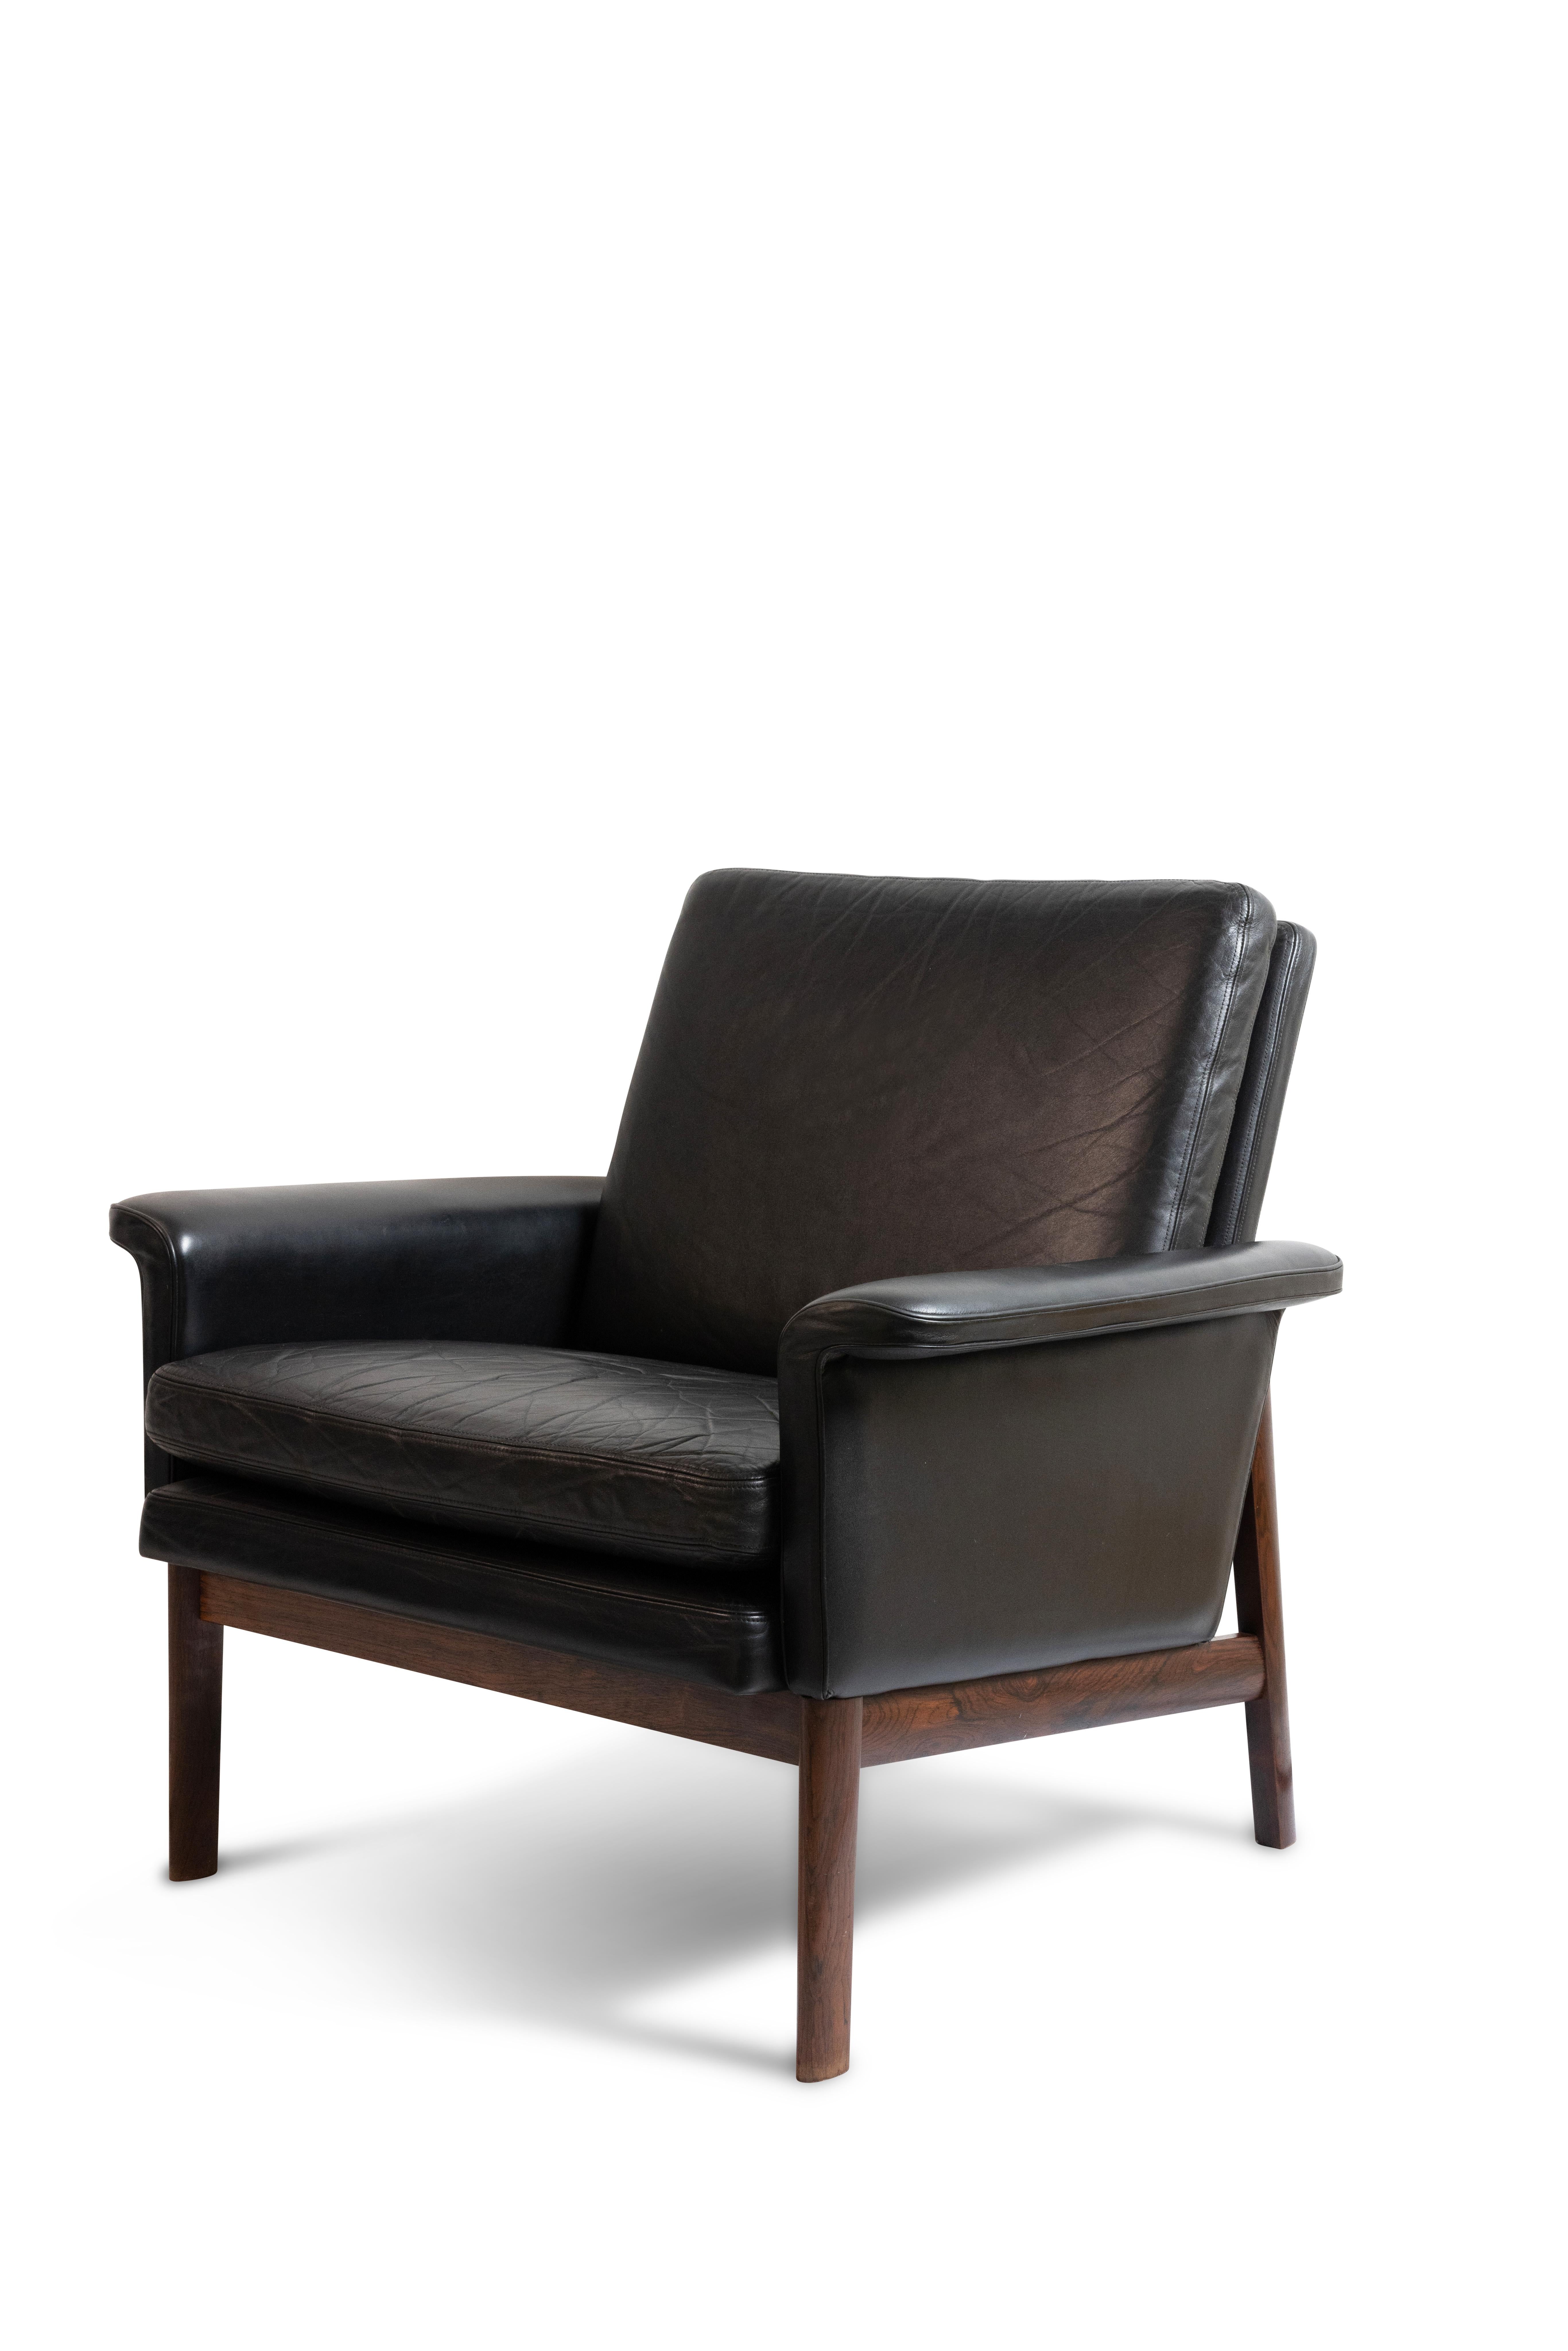 Finn Juhl Three Seat Sofa with Original Black Leather, Model 218/3, Denmark For Sale 3